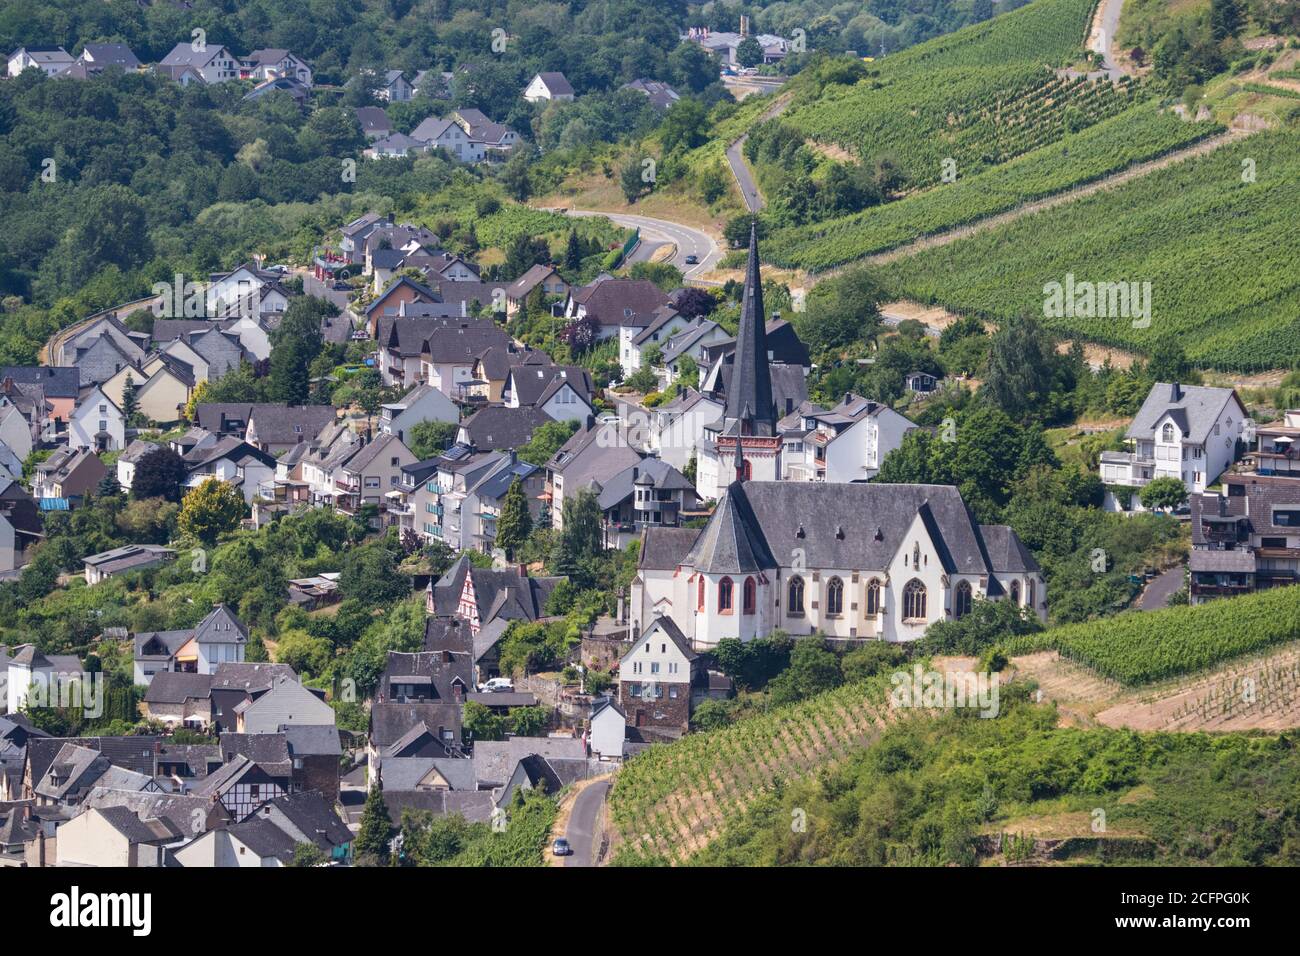 Saint Maximin Church at Klotten, viniculture along the Mosel, Germany, Rhineland-Palatinate, Klotten Stock Photo